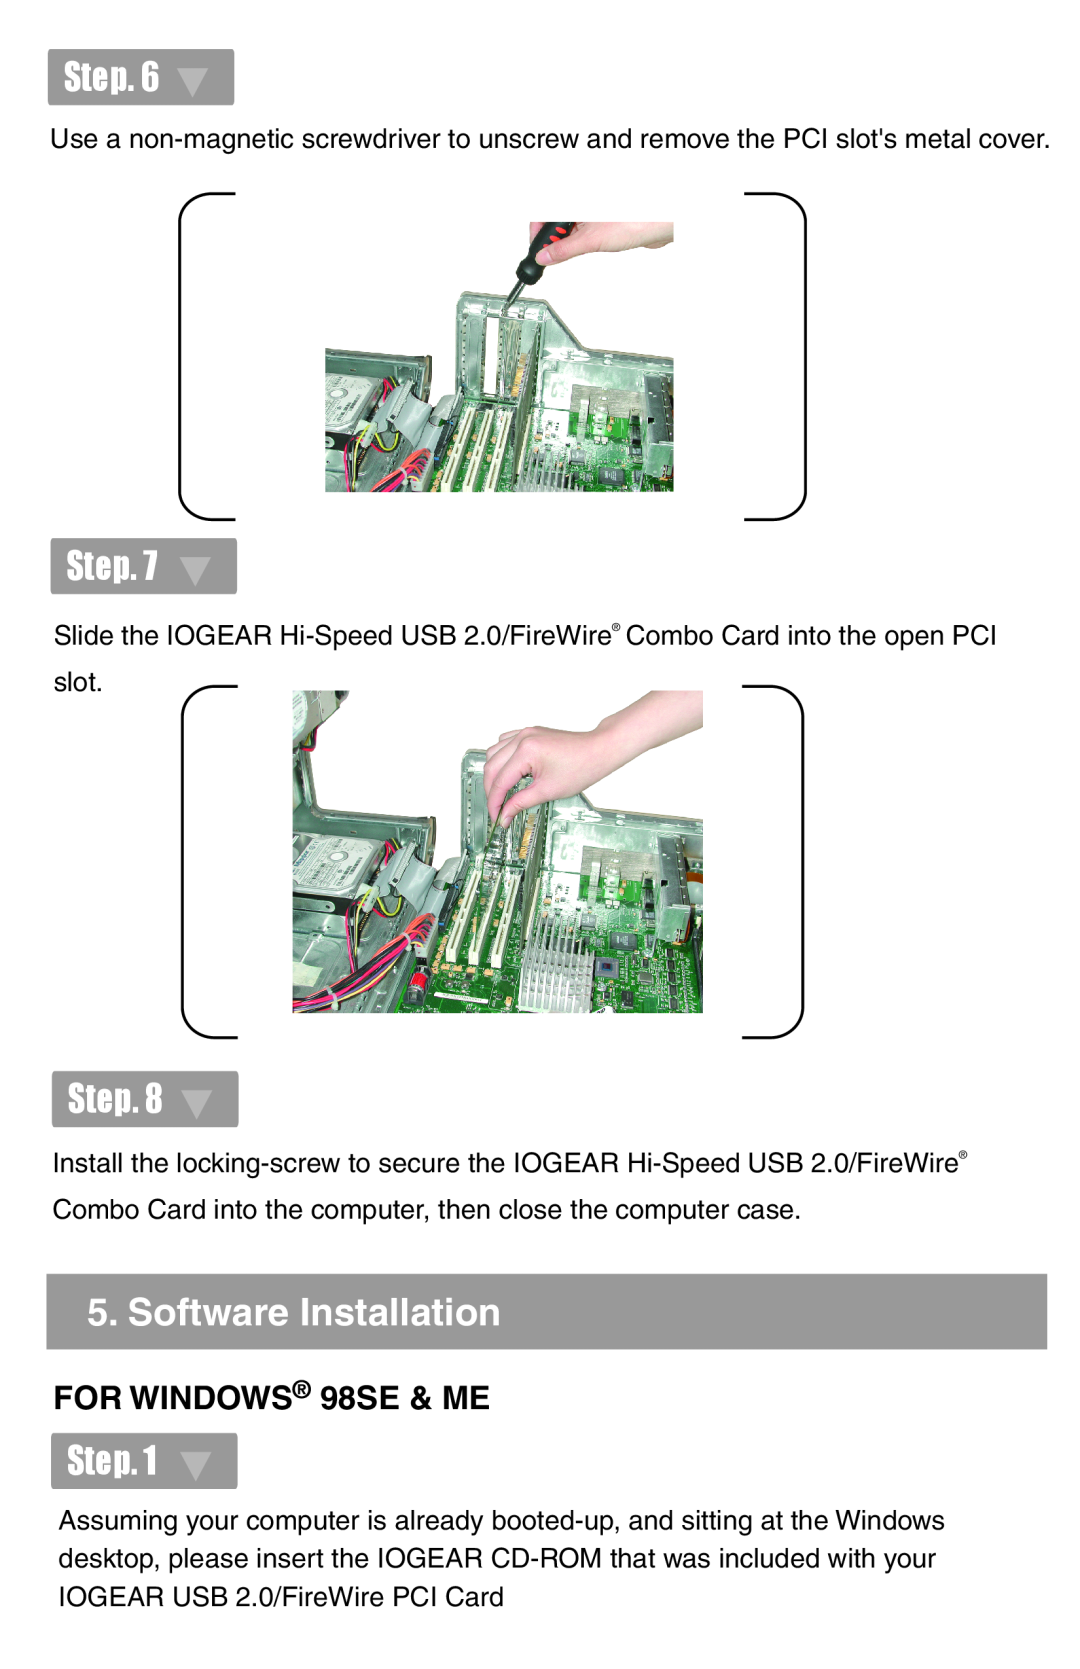 IOGear GUF320 quick start Software Installation, FOR WINDOWS 98SE & ME, Step 